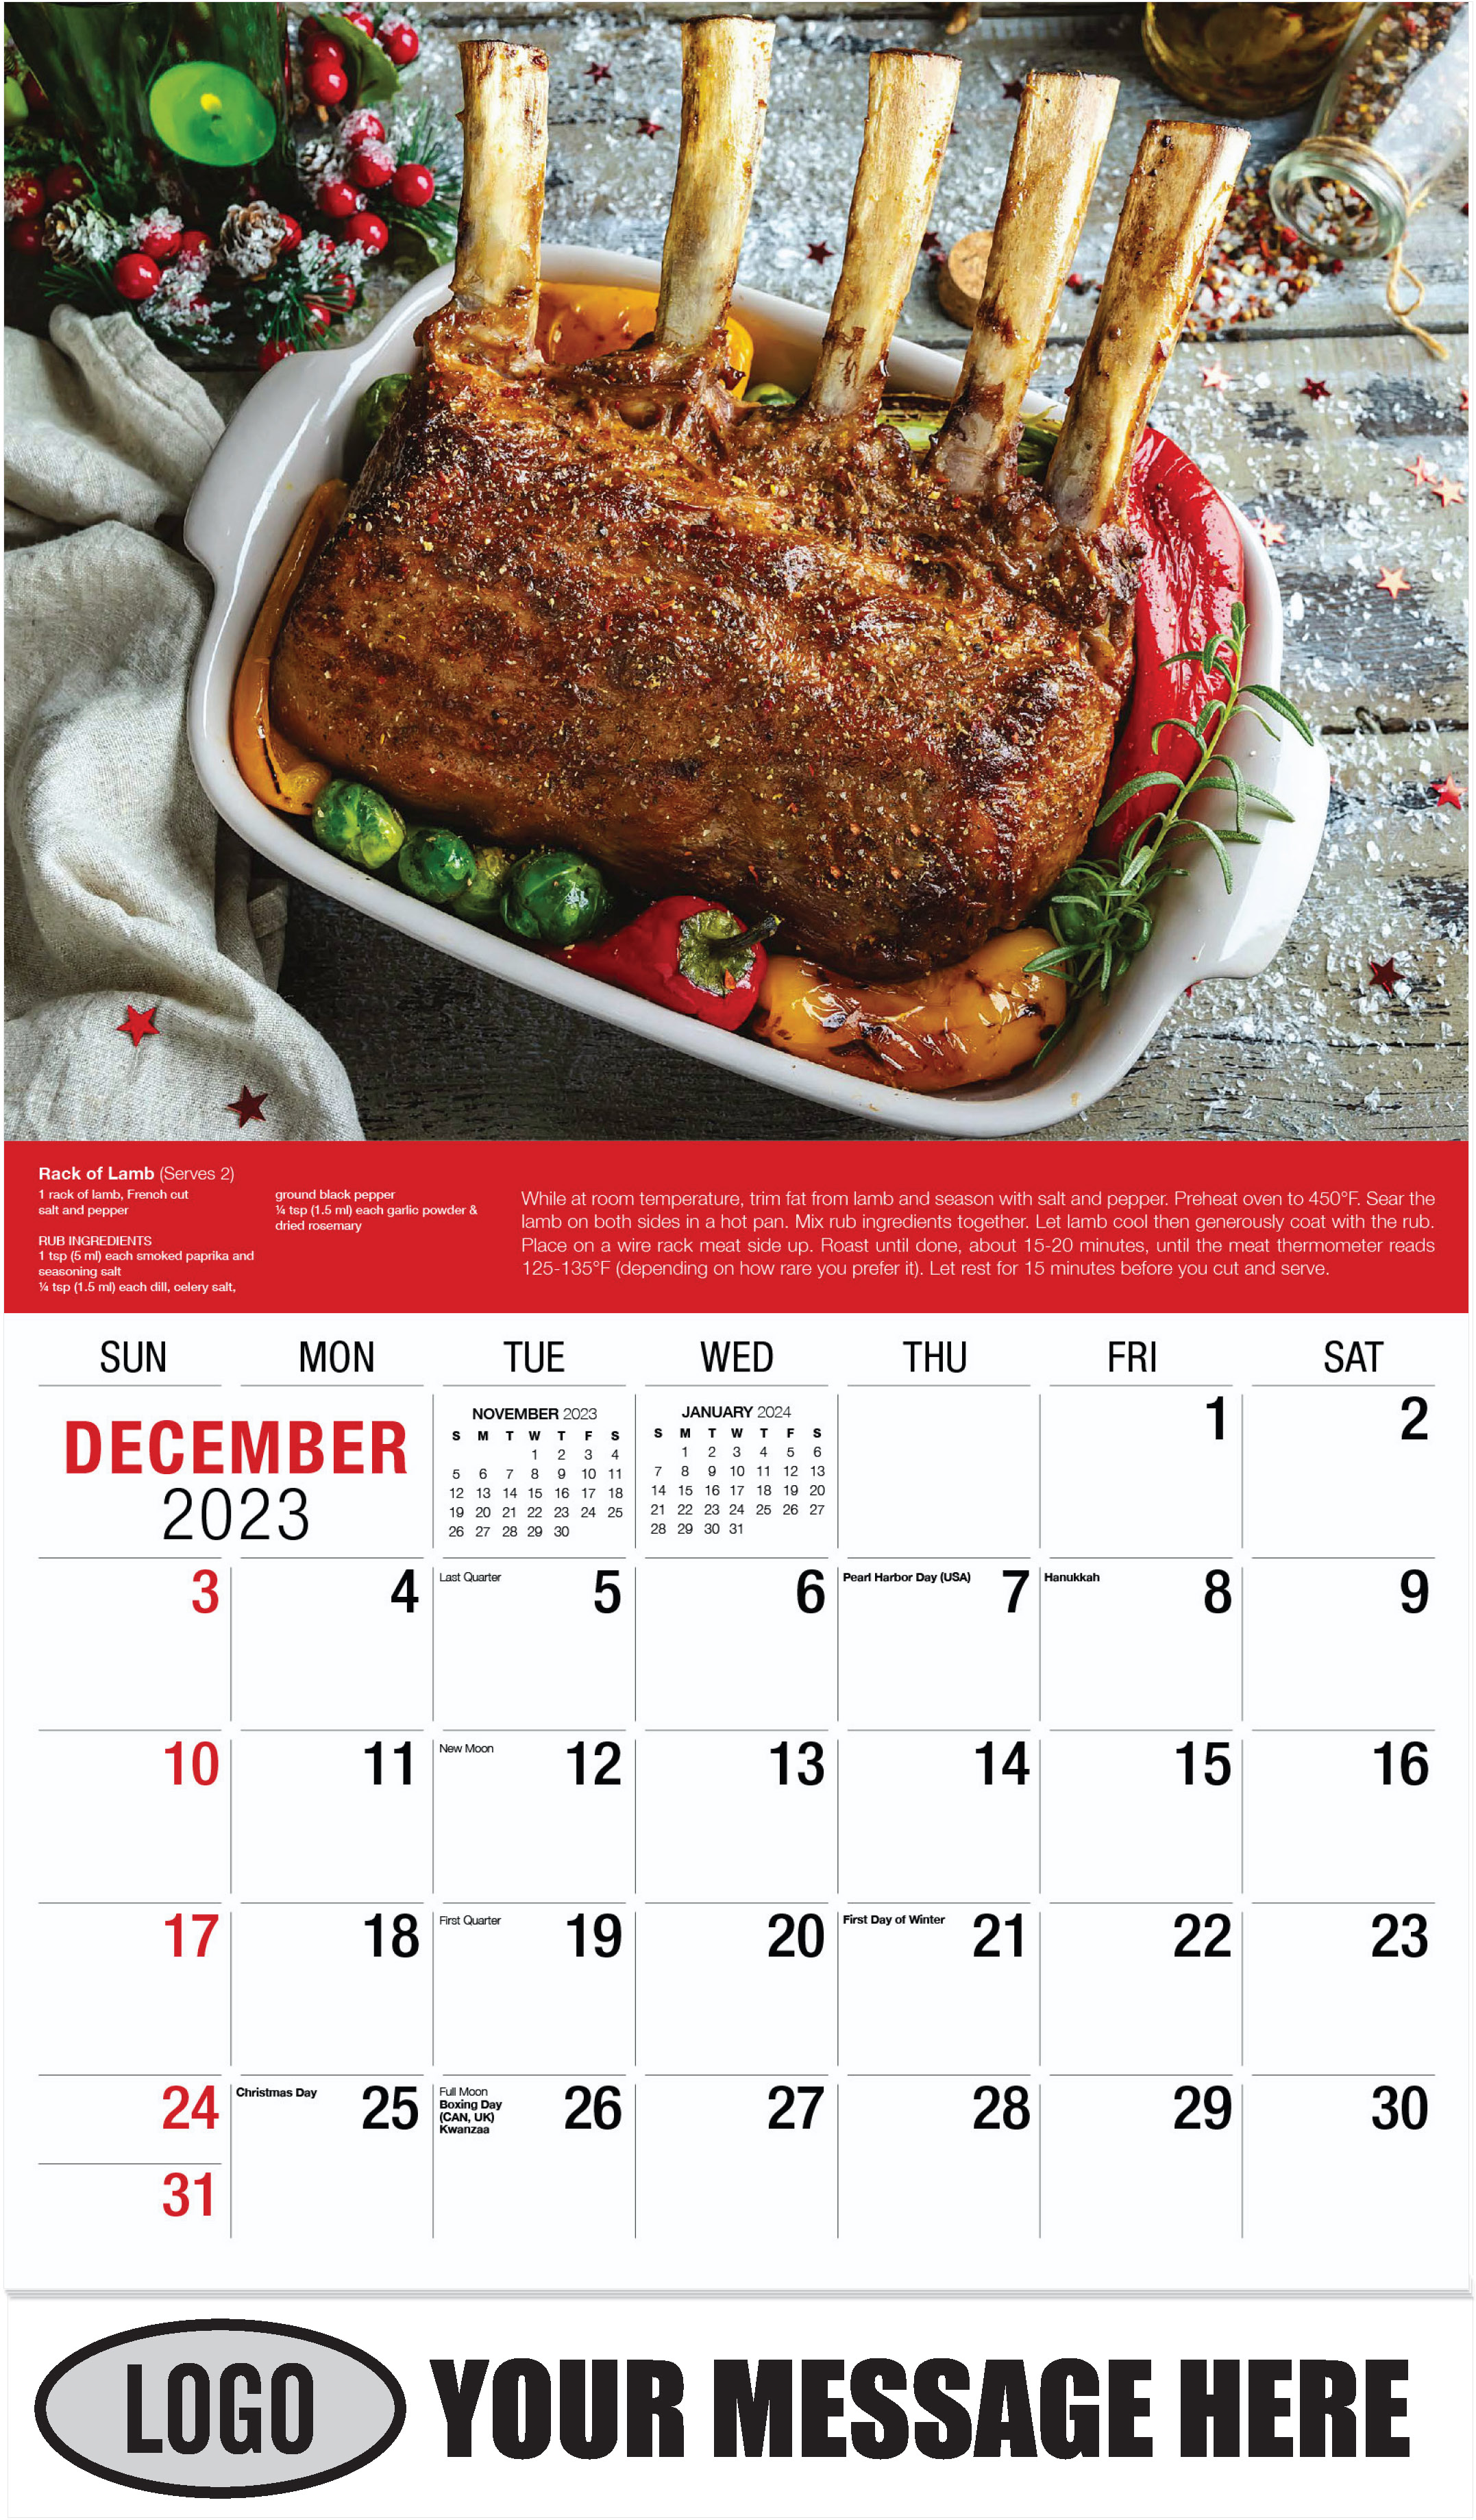 December 2023 - Recipes 2023 Promotional Calendar